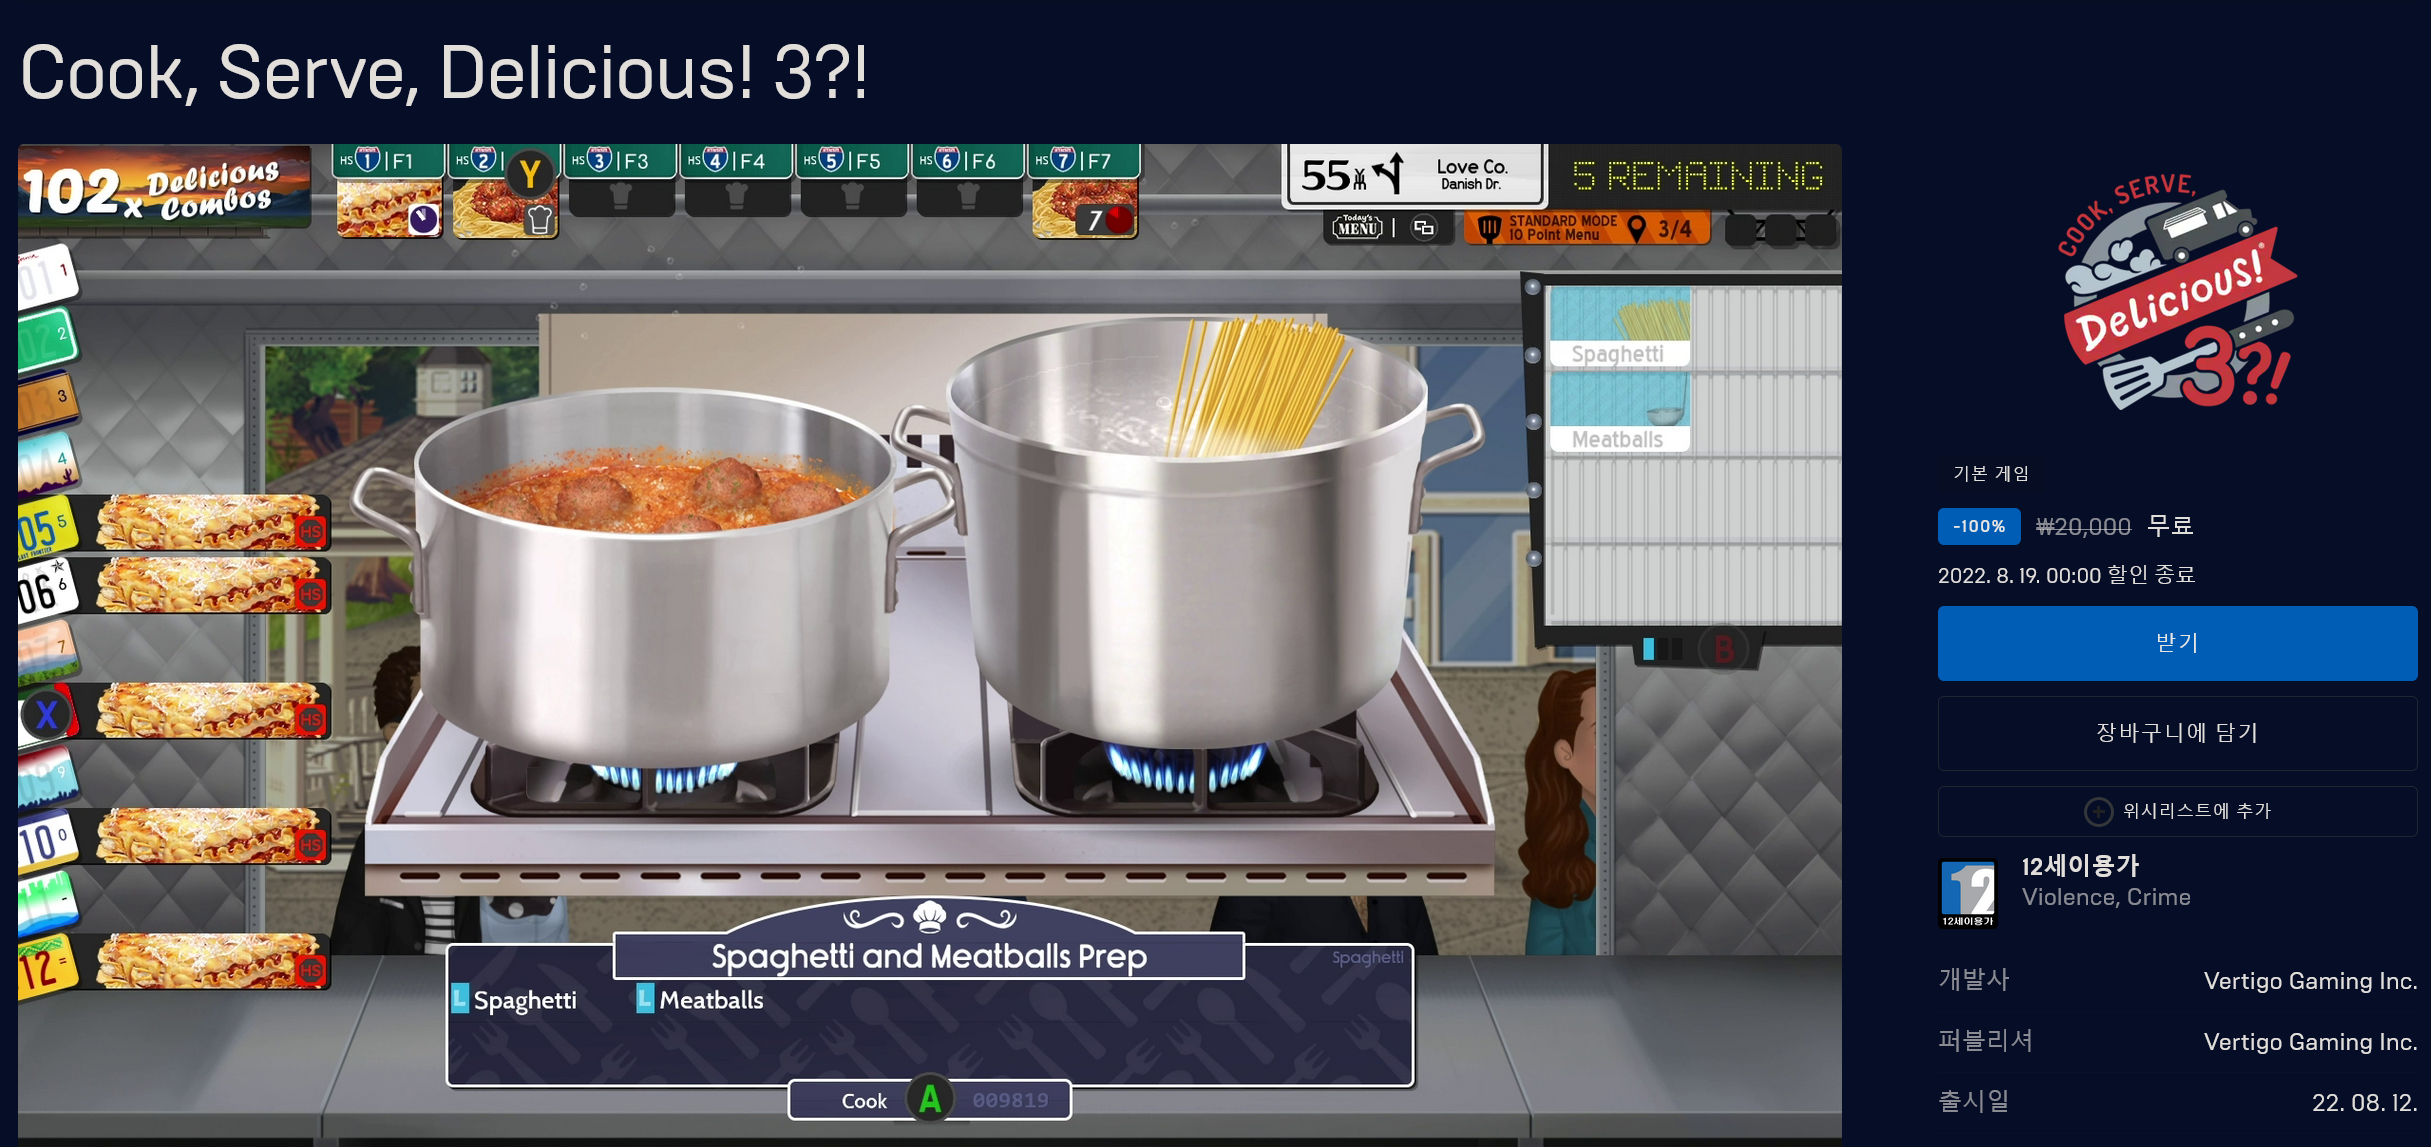 Screenshot 2022-08-12 at 00-06-40 Cook Serve Delicious! 3 ! 오늘 다운로드 및 구매 - Epic Games Store.png